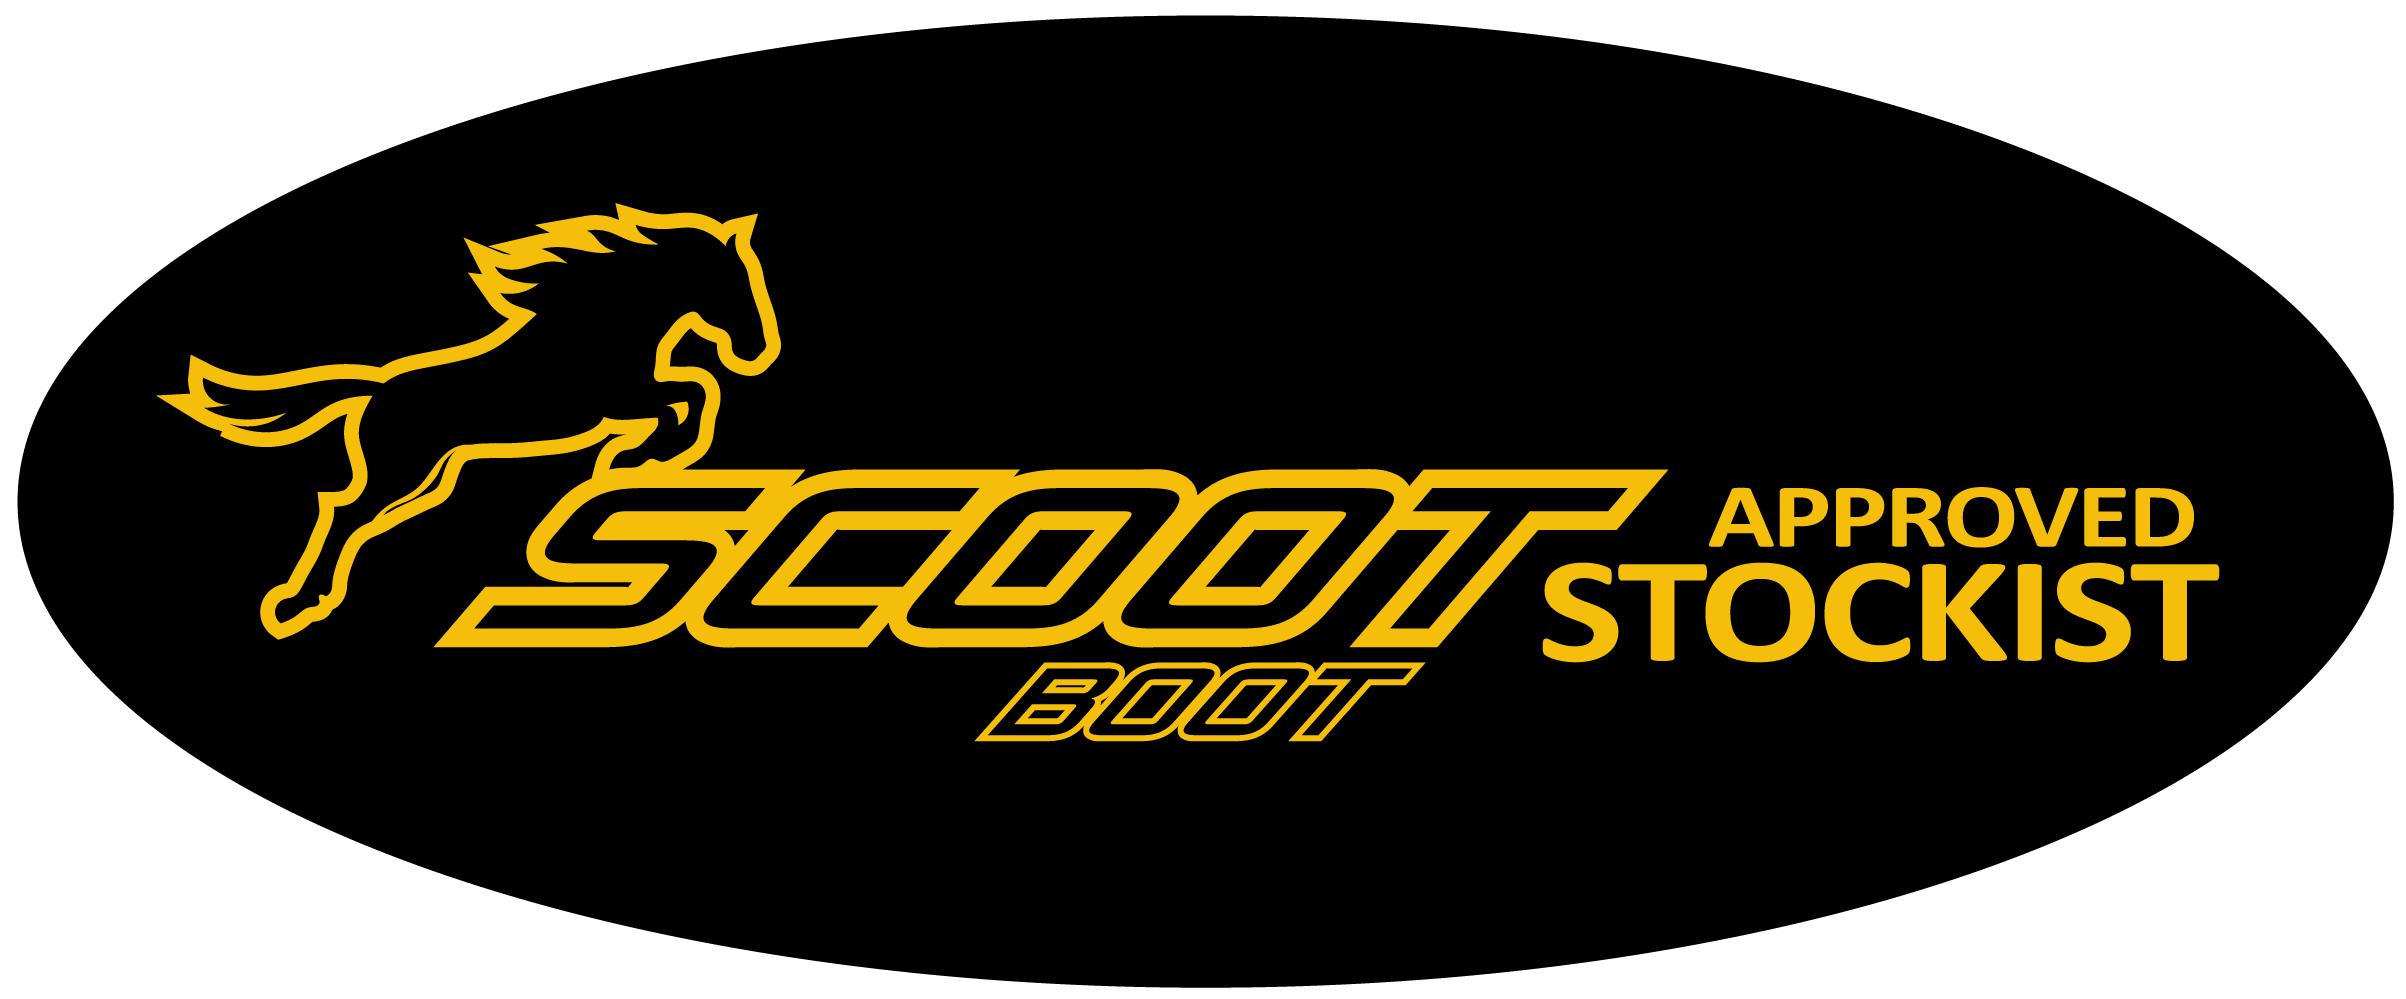 stockist-logo-oval.png